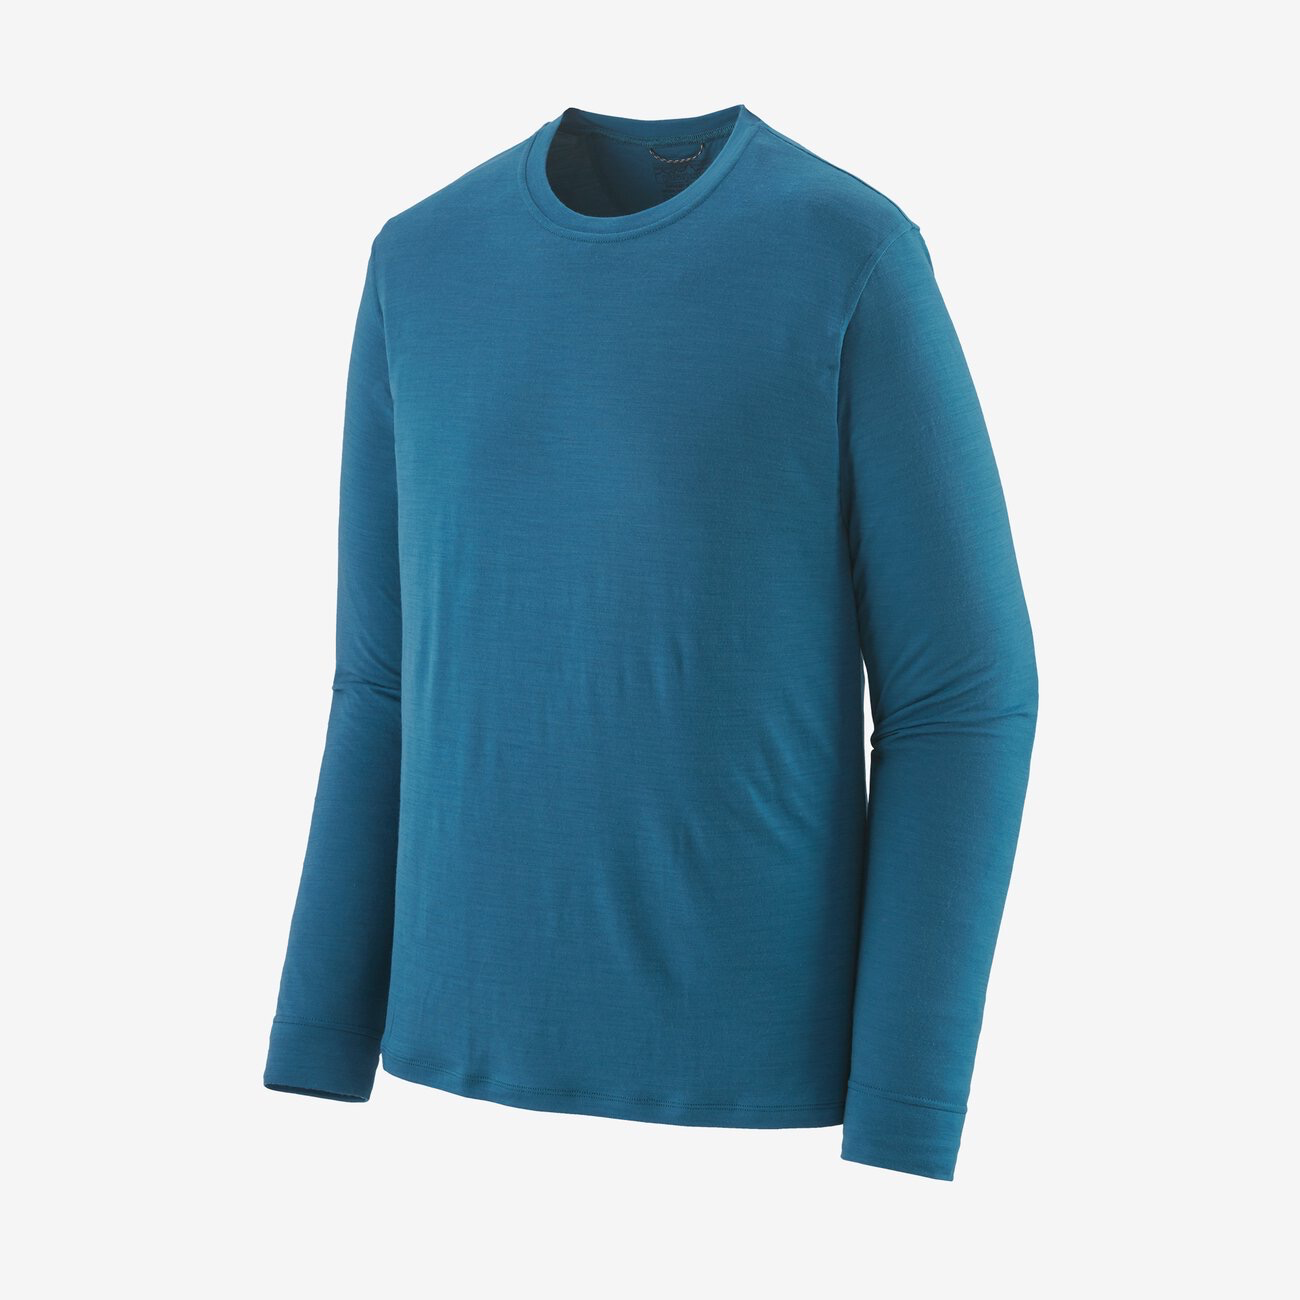 Patagonia M's L/S Capilene Cool Merino Shirt - Wavy Blue - Medium